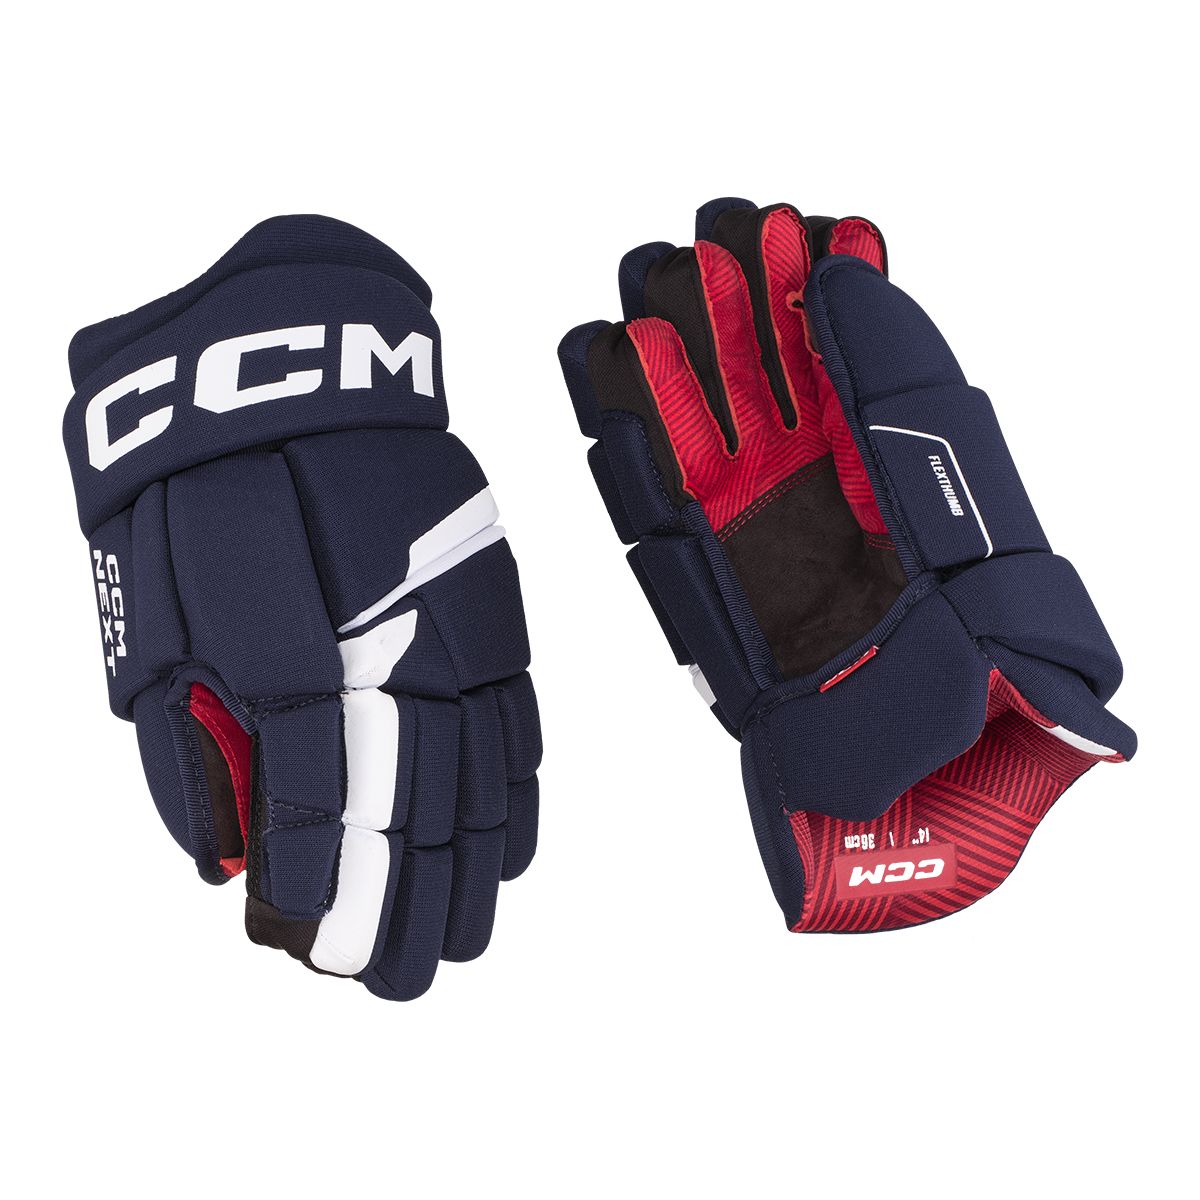 14" CCM Hockey Gloves 492 Tacks White Black Large